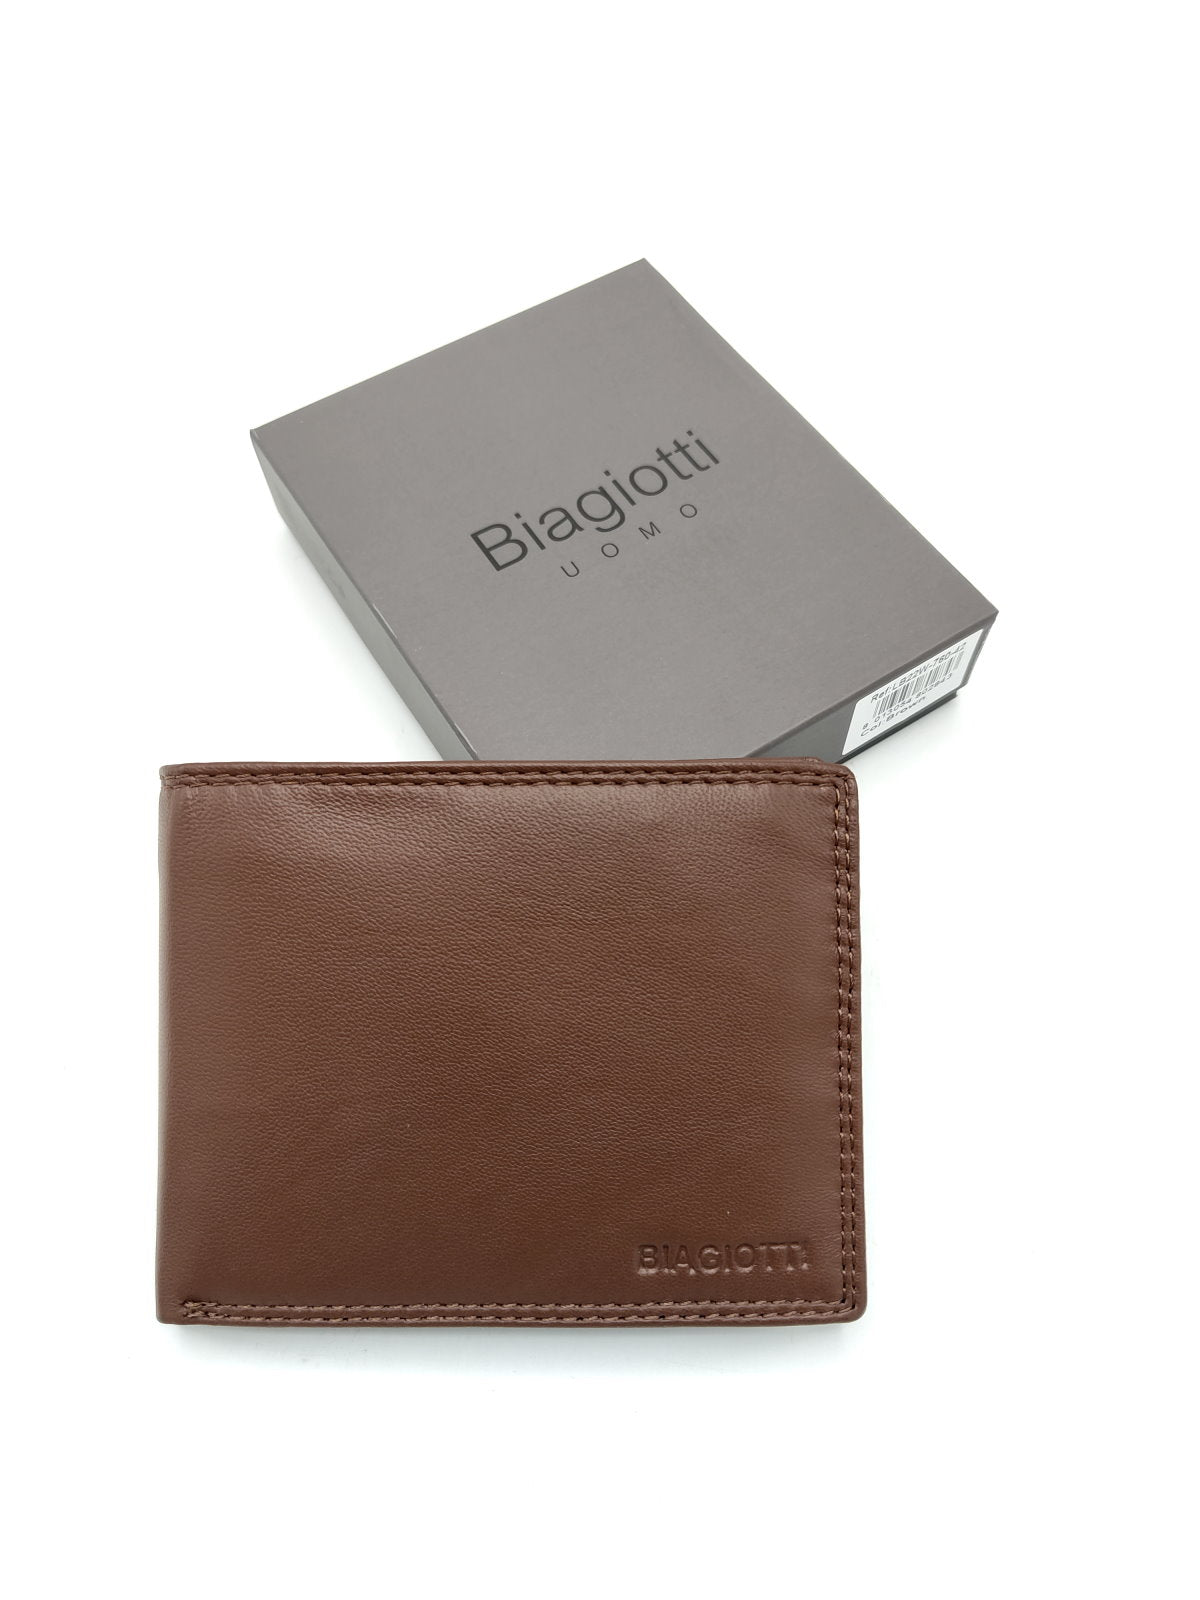 Genuine leather wallet for men, Brand Laura Biagiotti, art. LB760-42.290